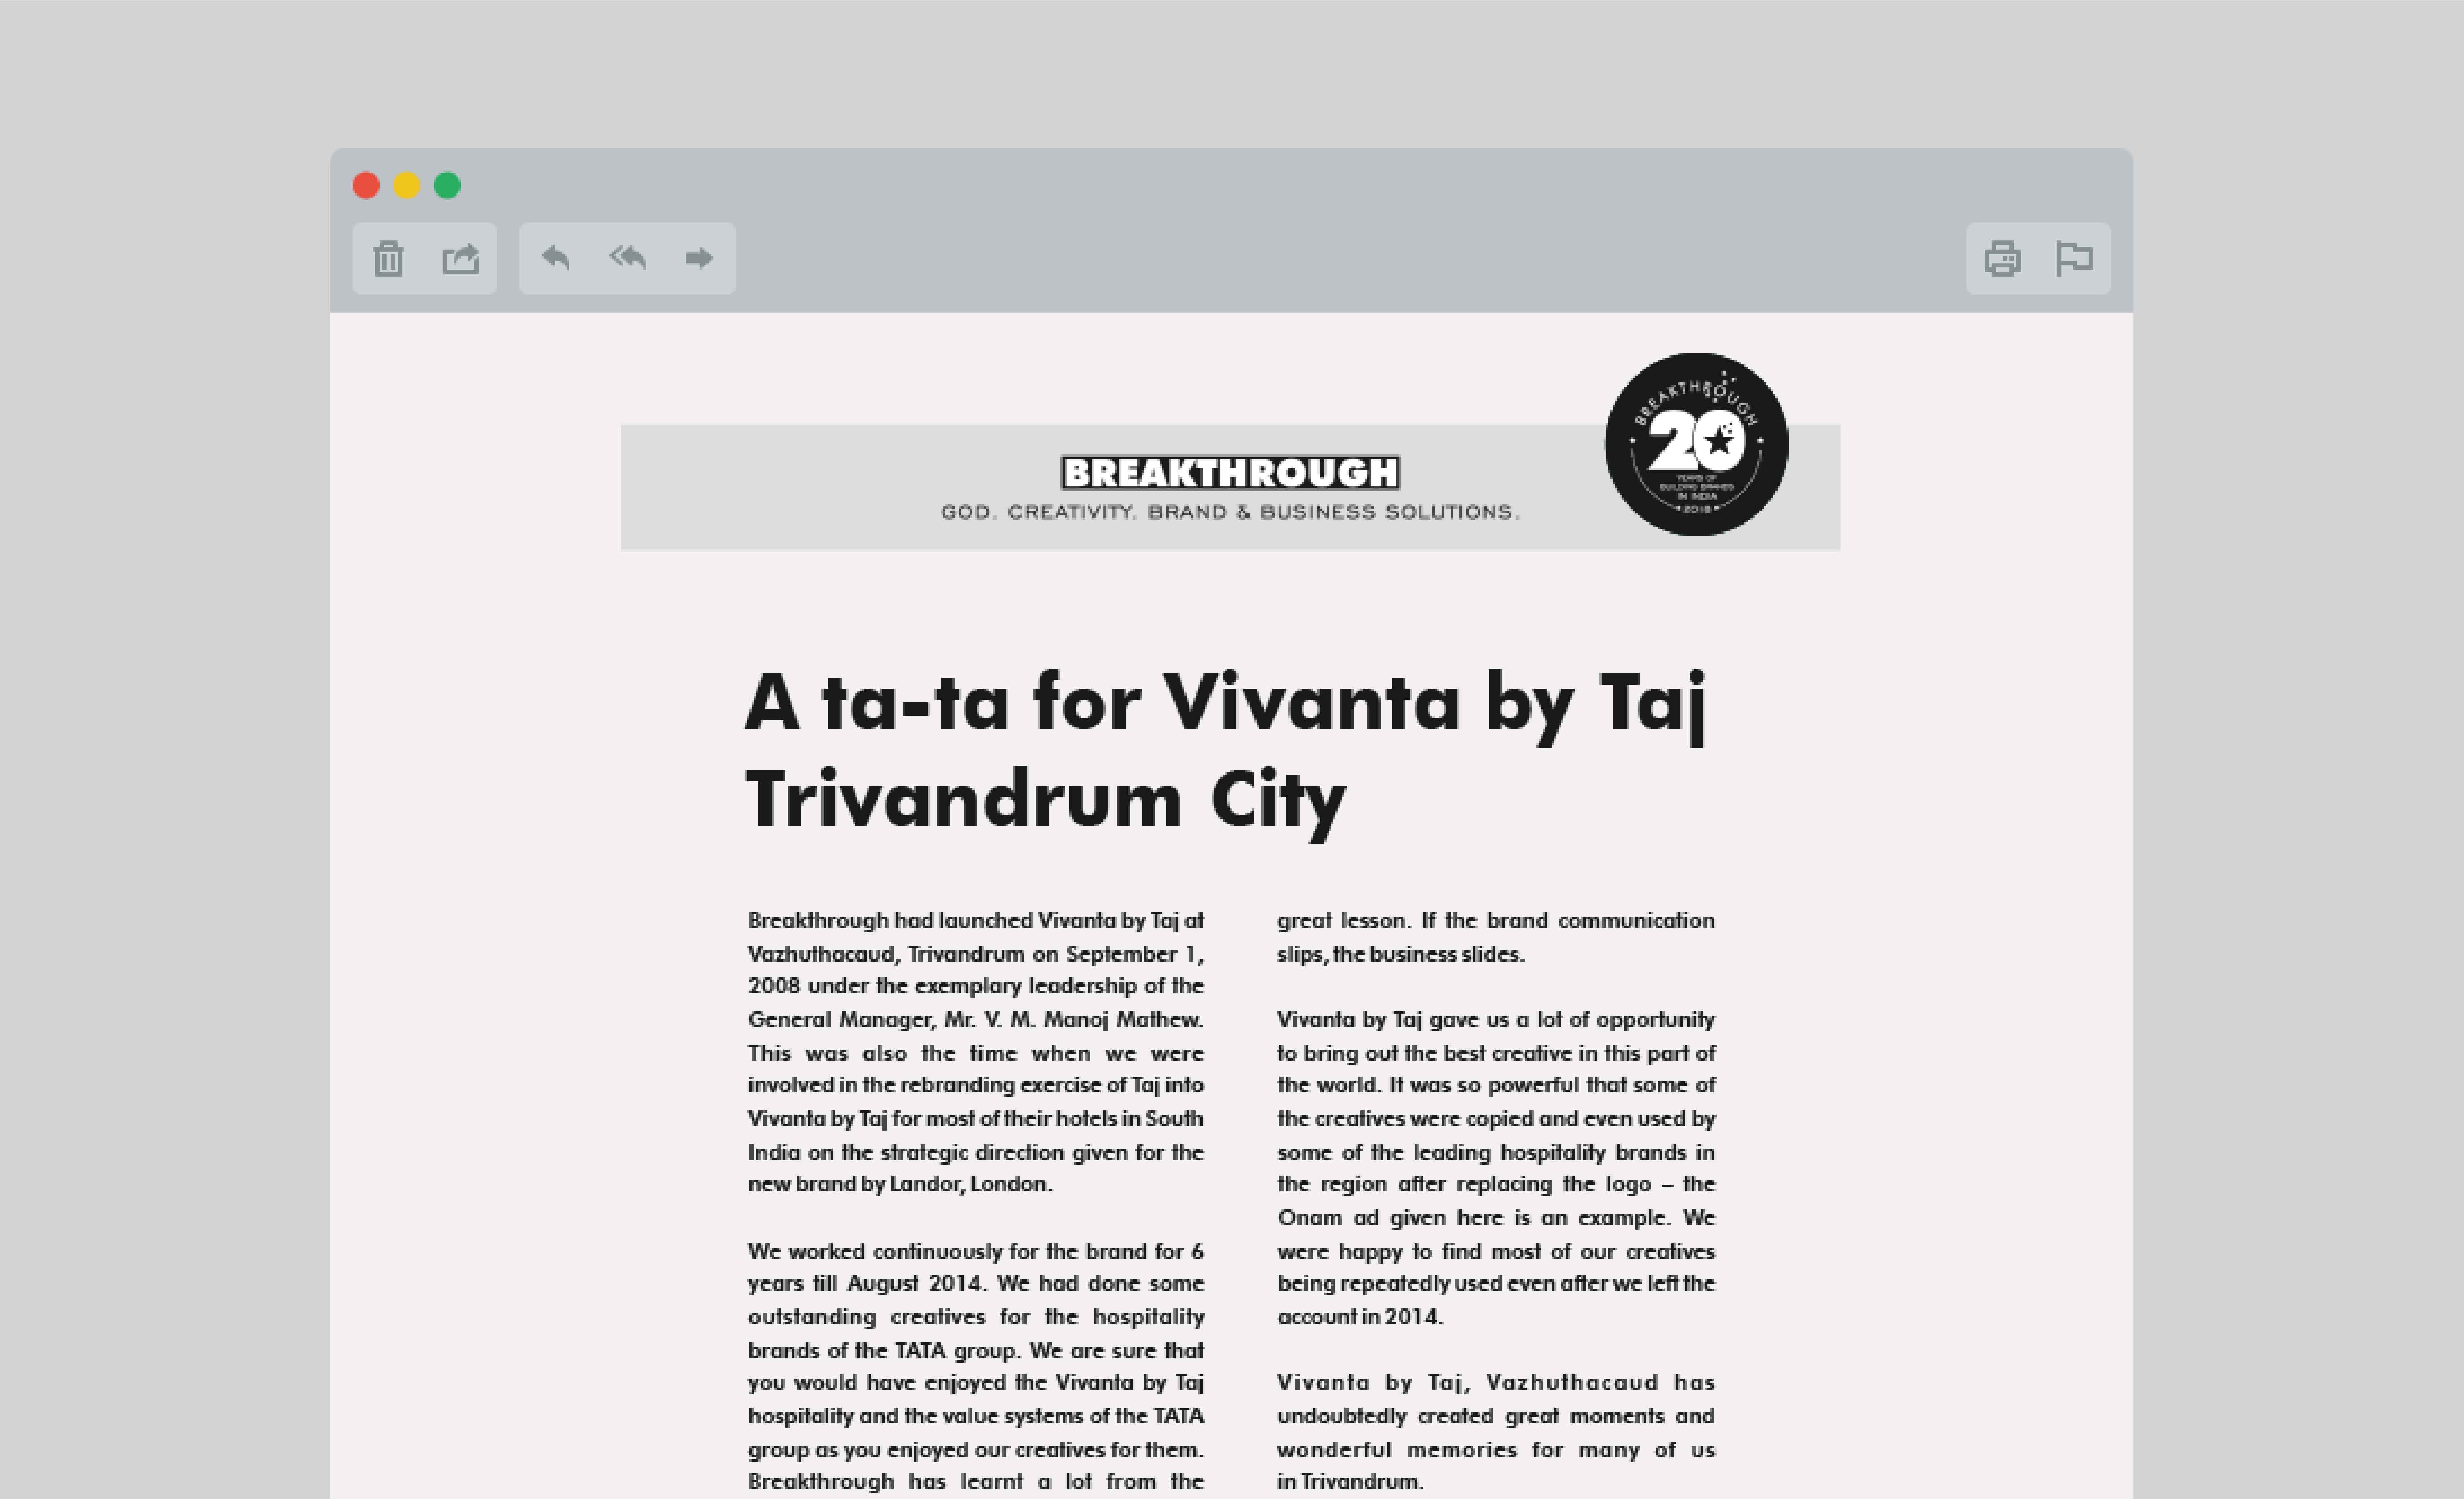 Vivanta by Taj at Trivandrum March 31, 2019 city closes down.